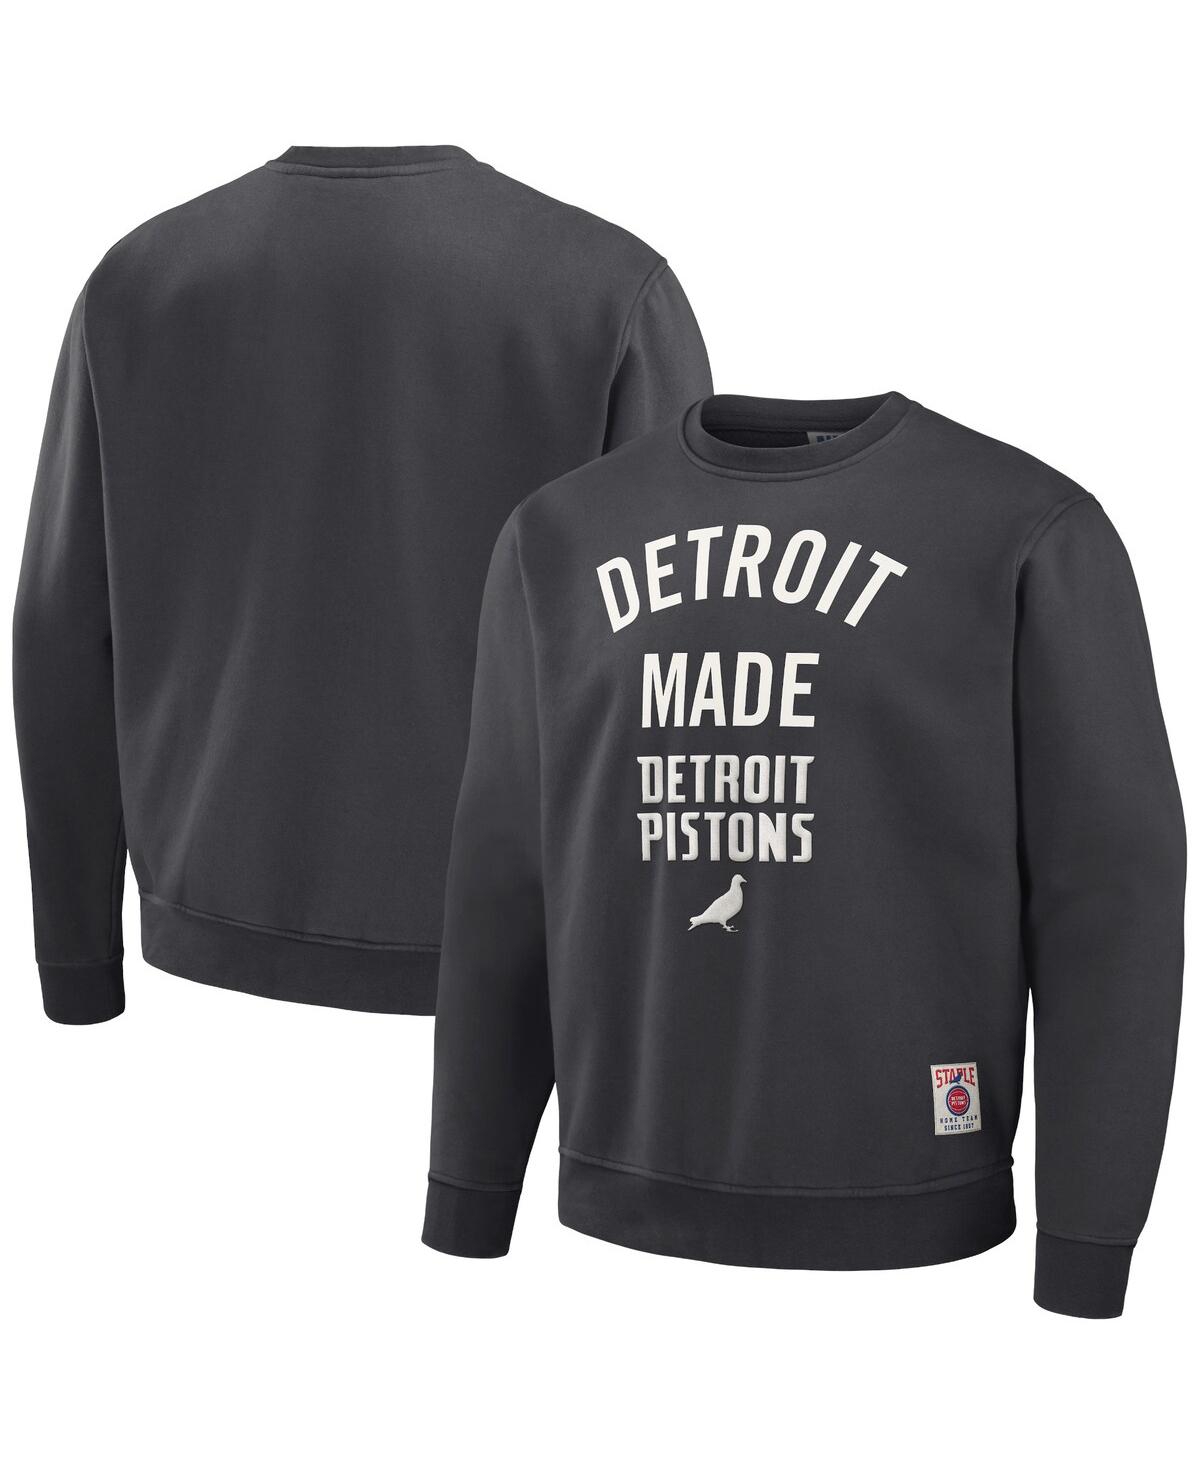 Men's Nba x Staple Anthracite Detroit Pistons Plush Pullover Sweatshirt - Anthracite